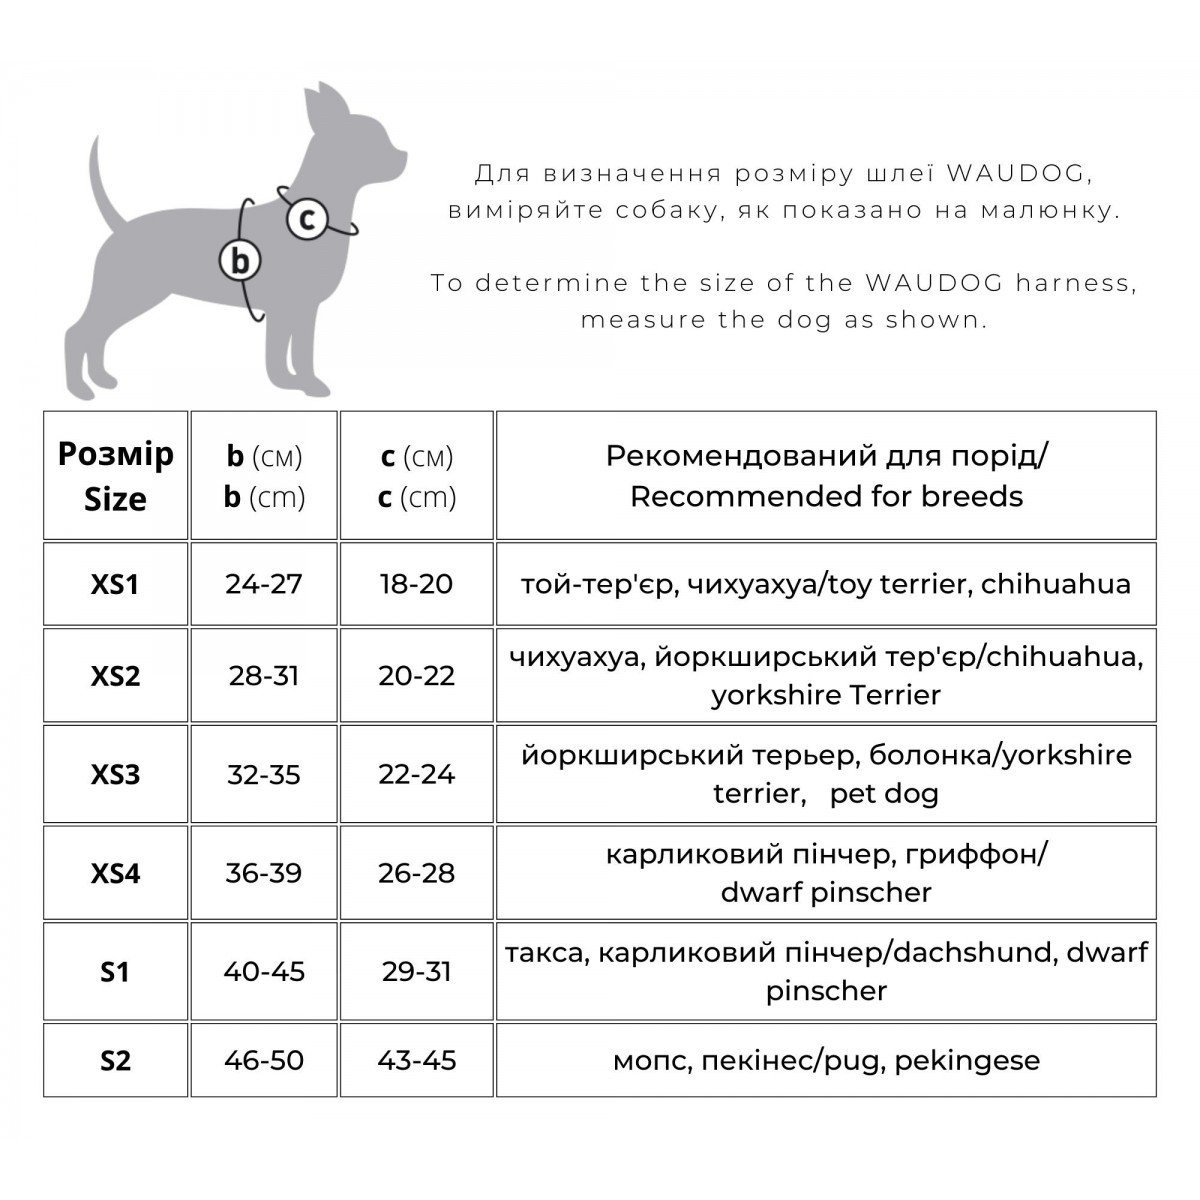 Шлея для собак мягкая Waudog Clothes, с QR паспортом, Вау, XS1, 24-27х18-20 см - фото 4